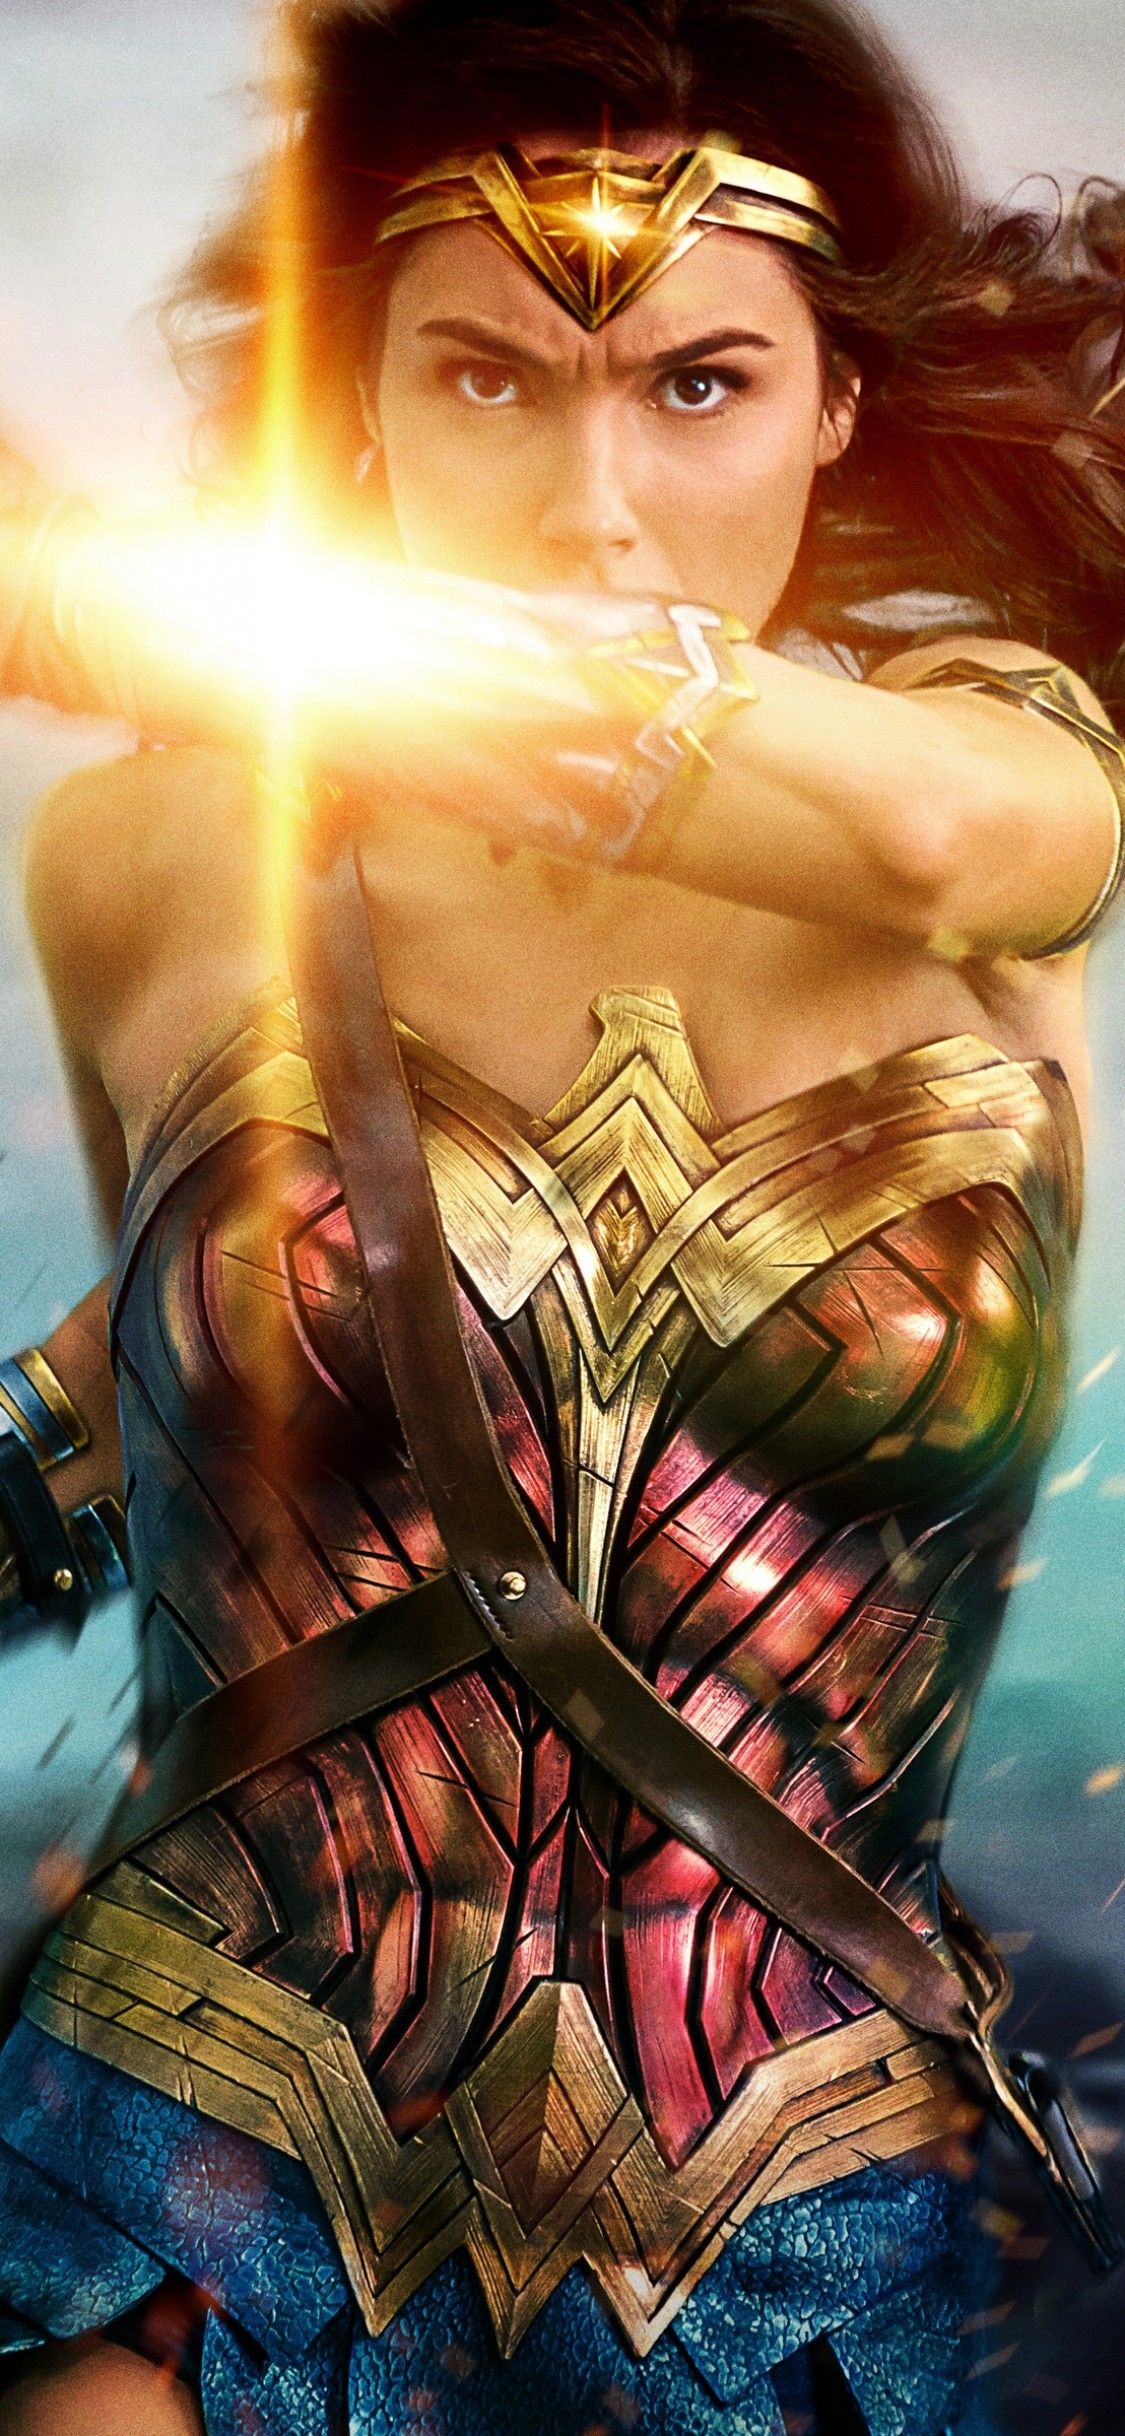 Download 1125x2436 Wonder Woman, Gal Gadot Wallpaper for iPhone X